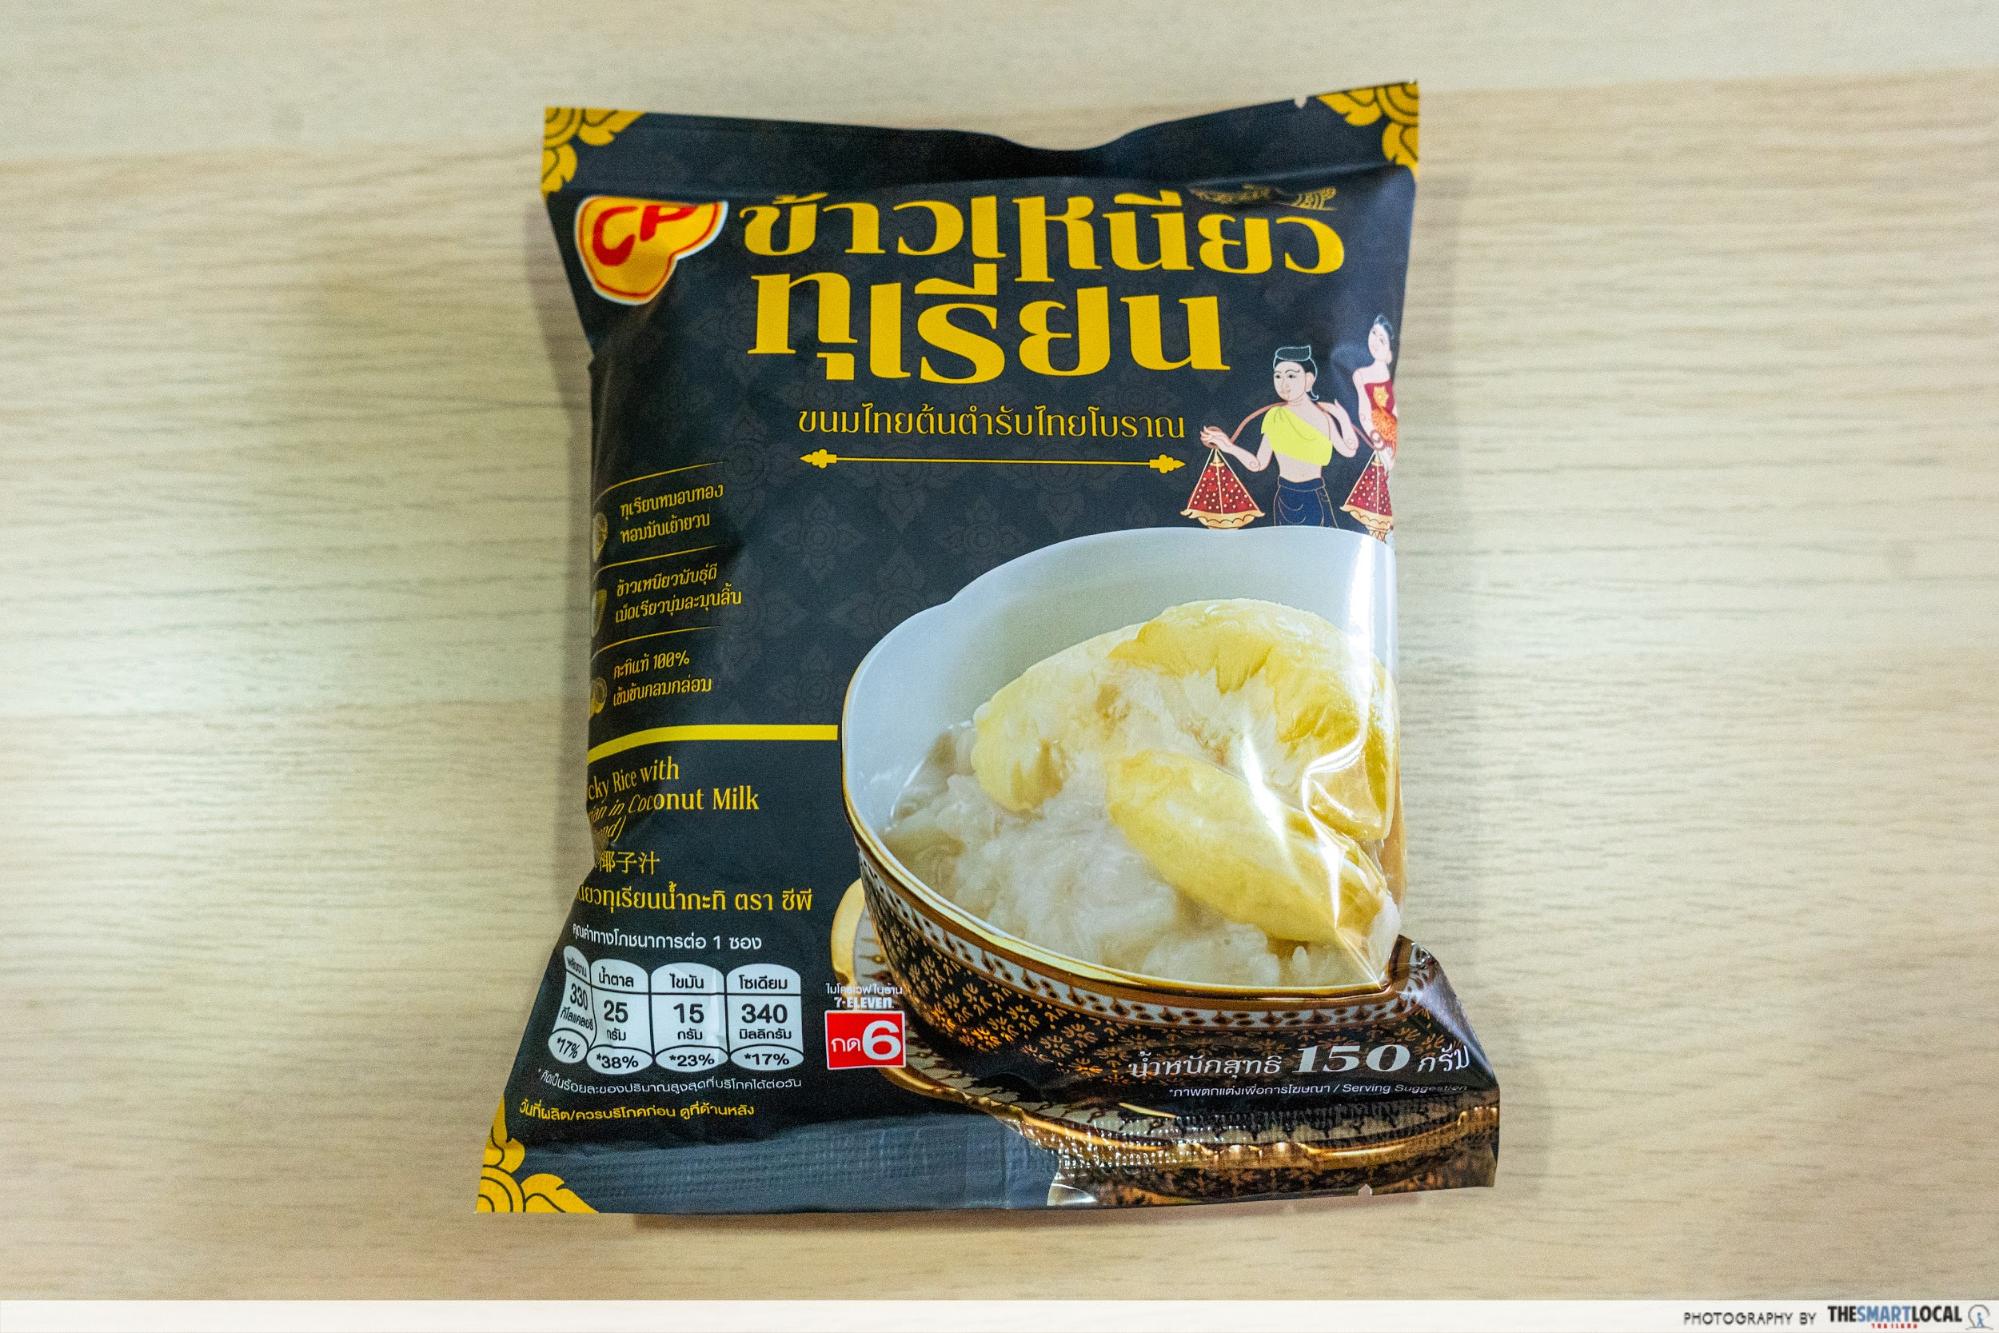 frozen durian sticky rice 7-11